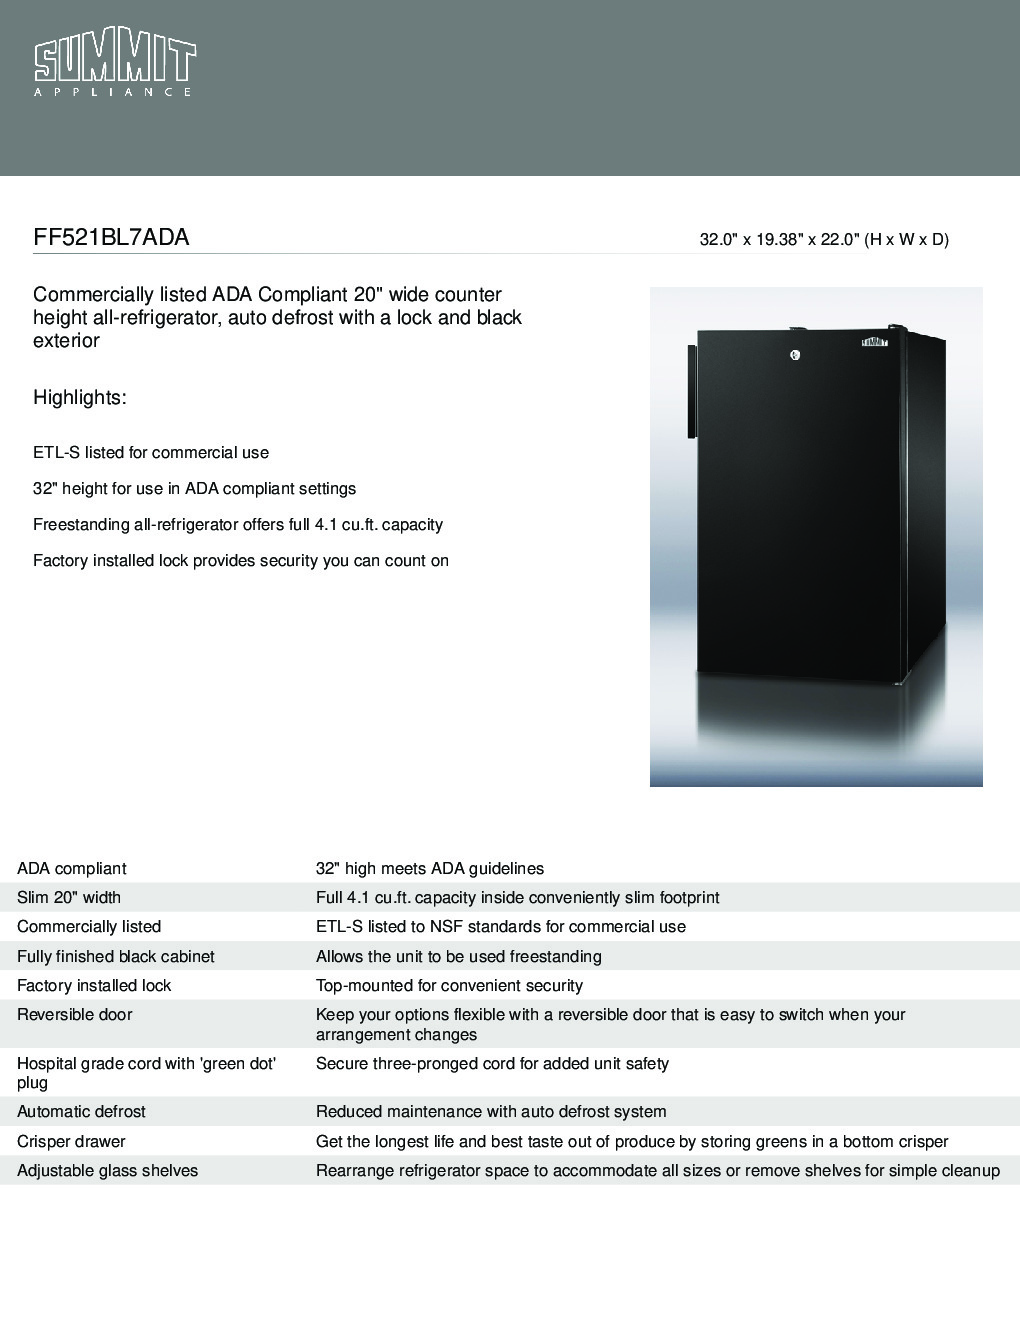 Summit FF521BL7ADA Reach-In Undercounter Refrigerator